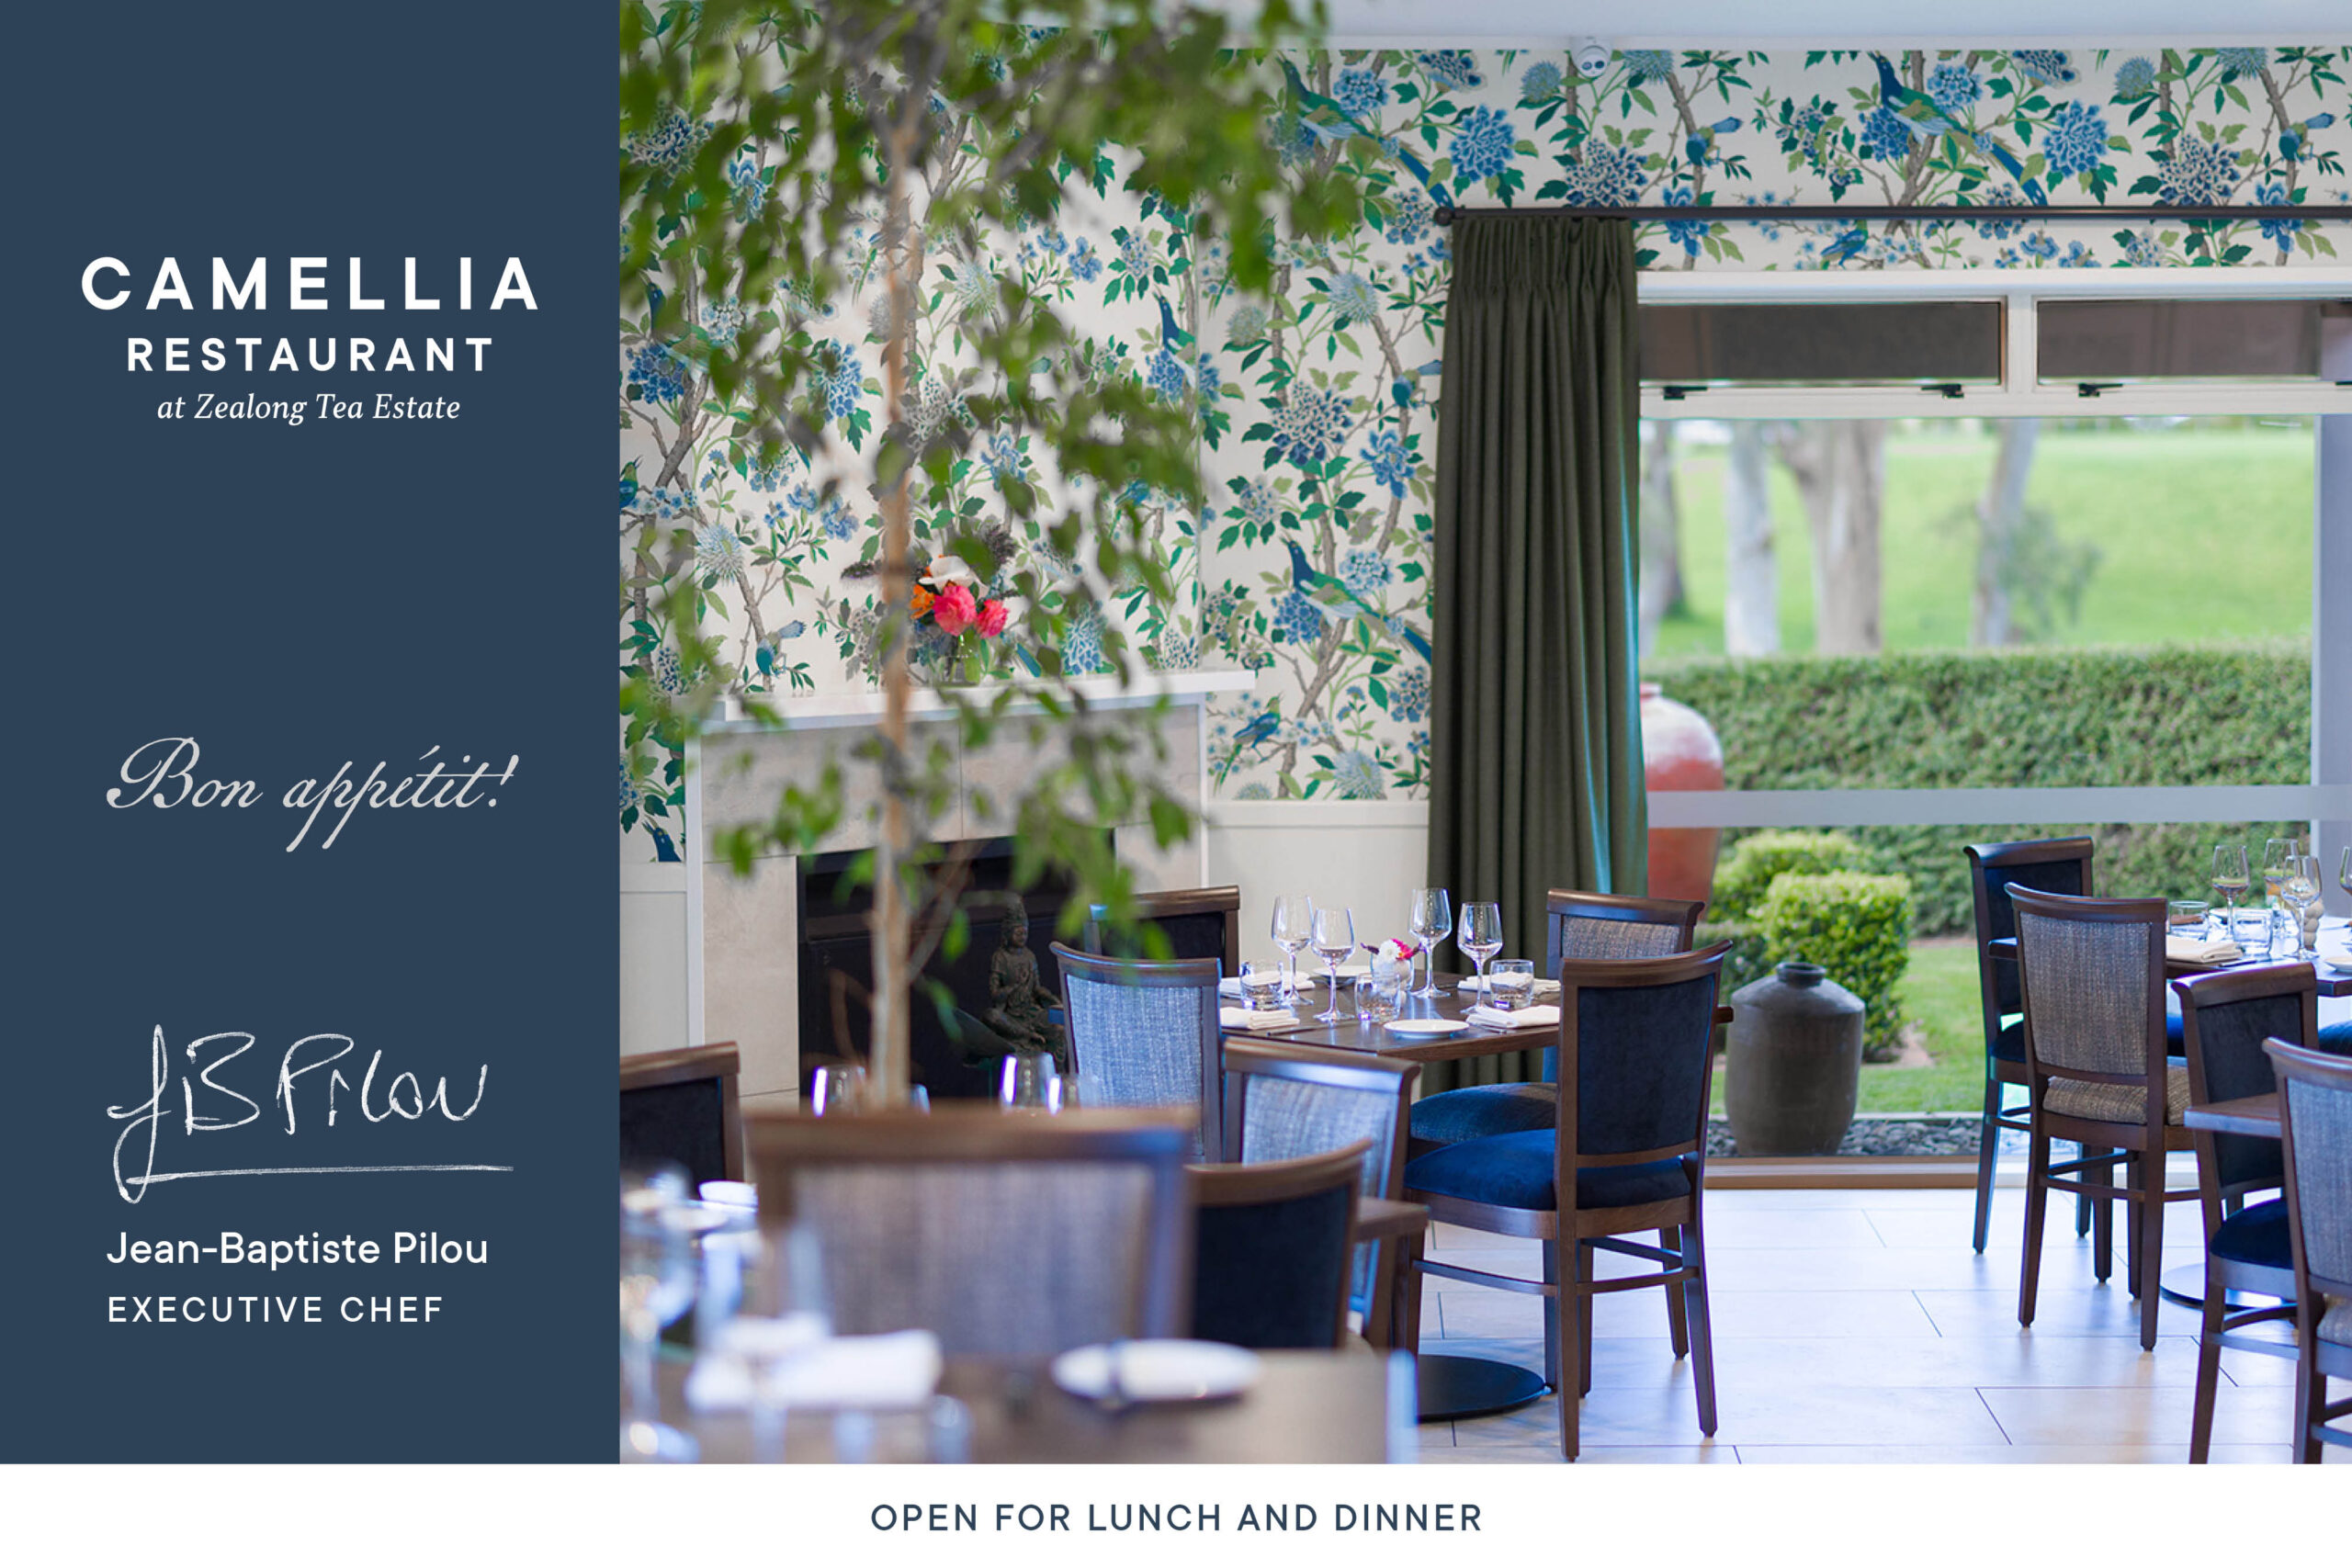 Camellia Restaurant Carousel Ad 2 - Homepage2